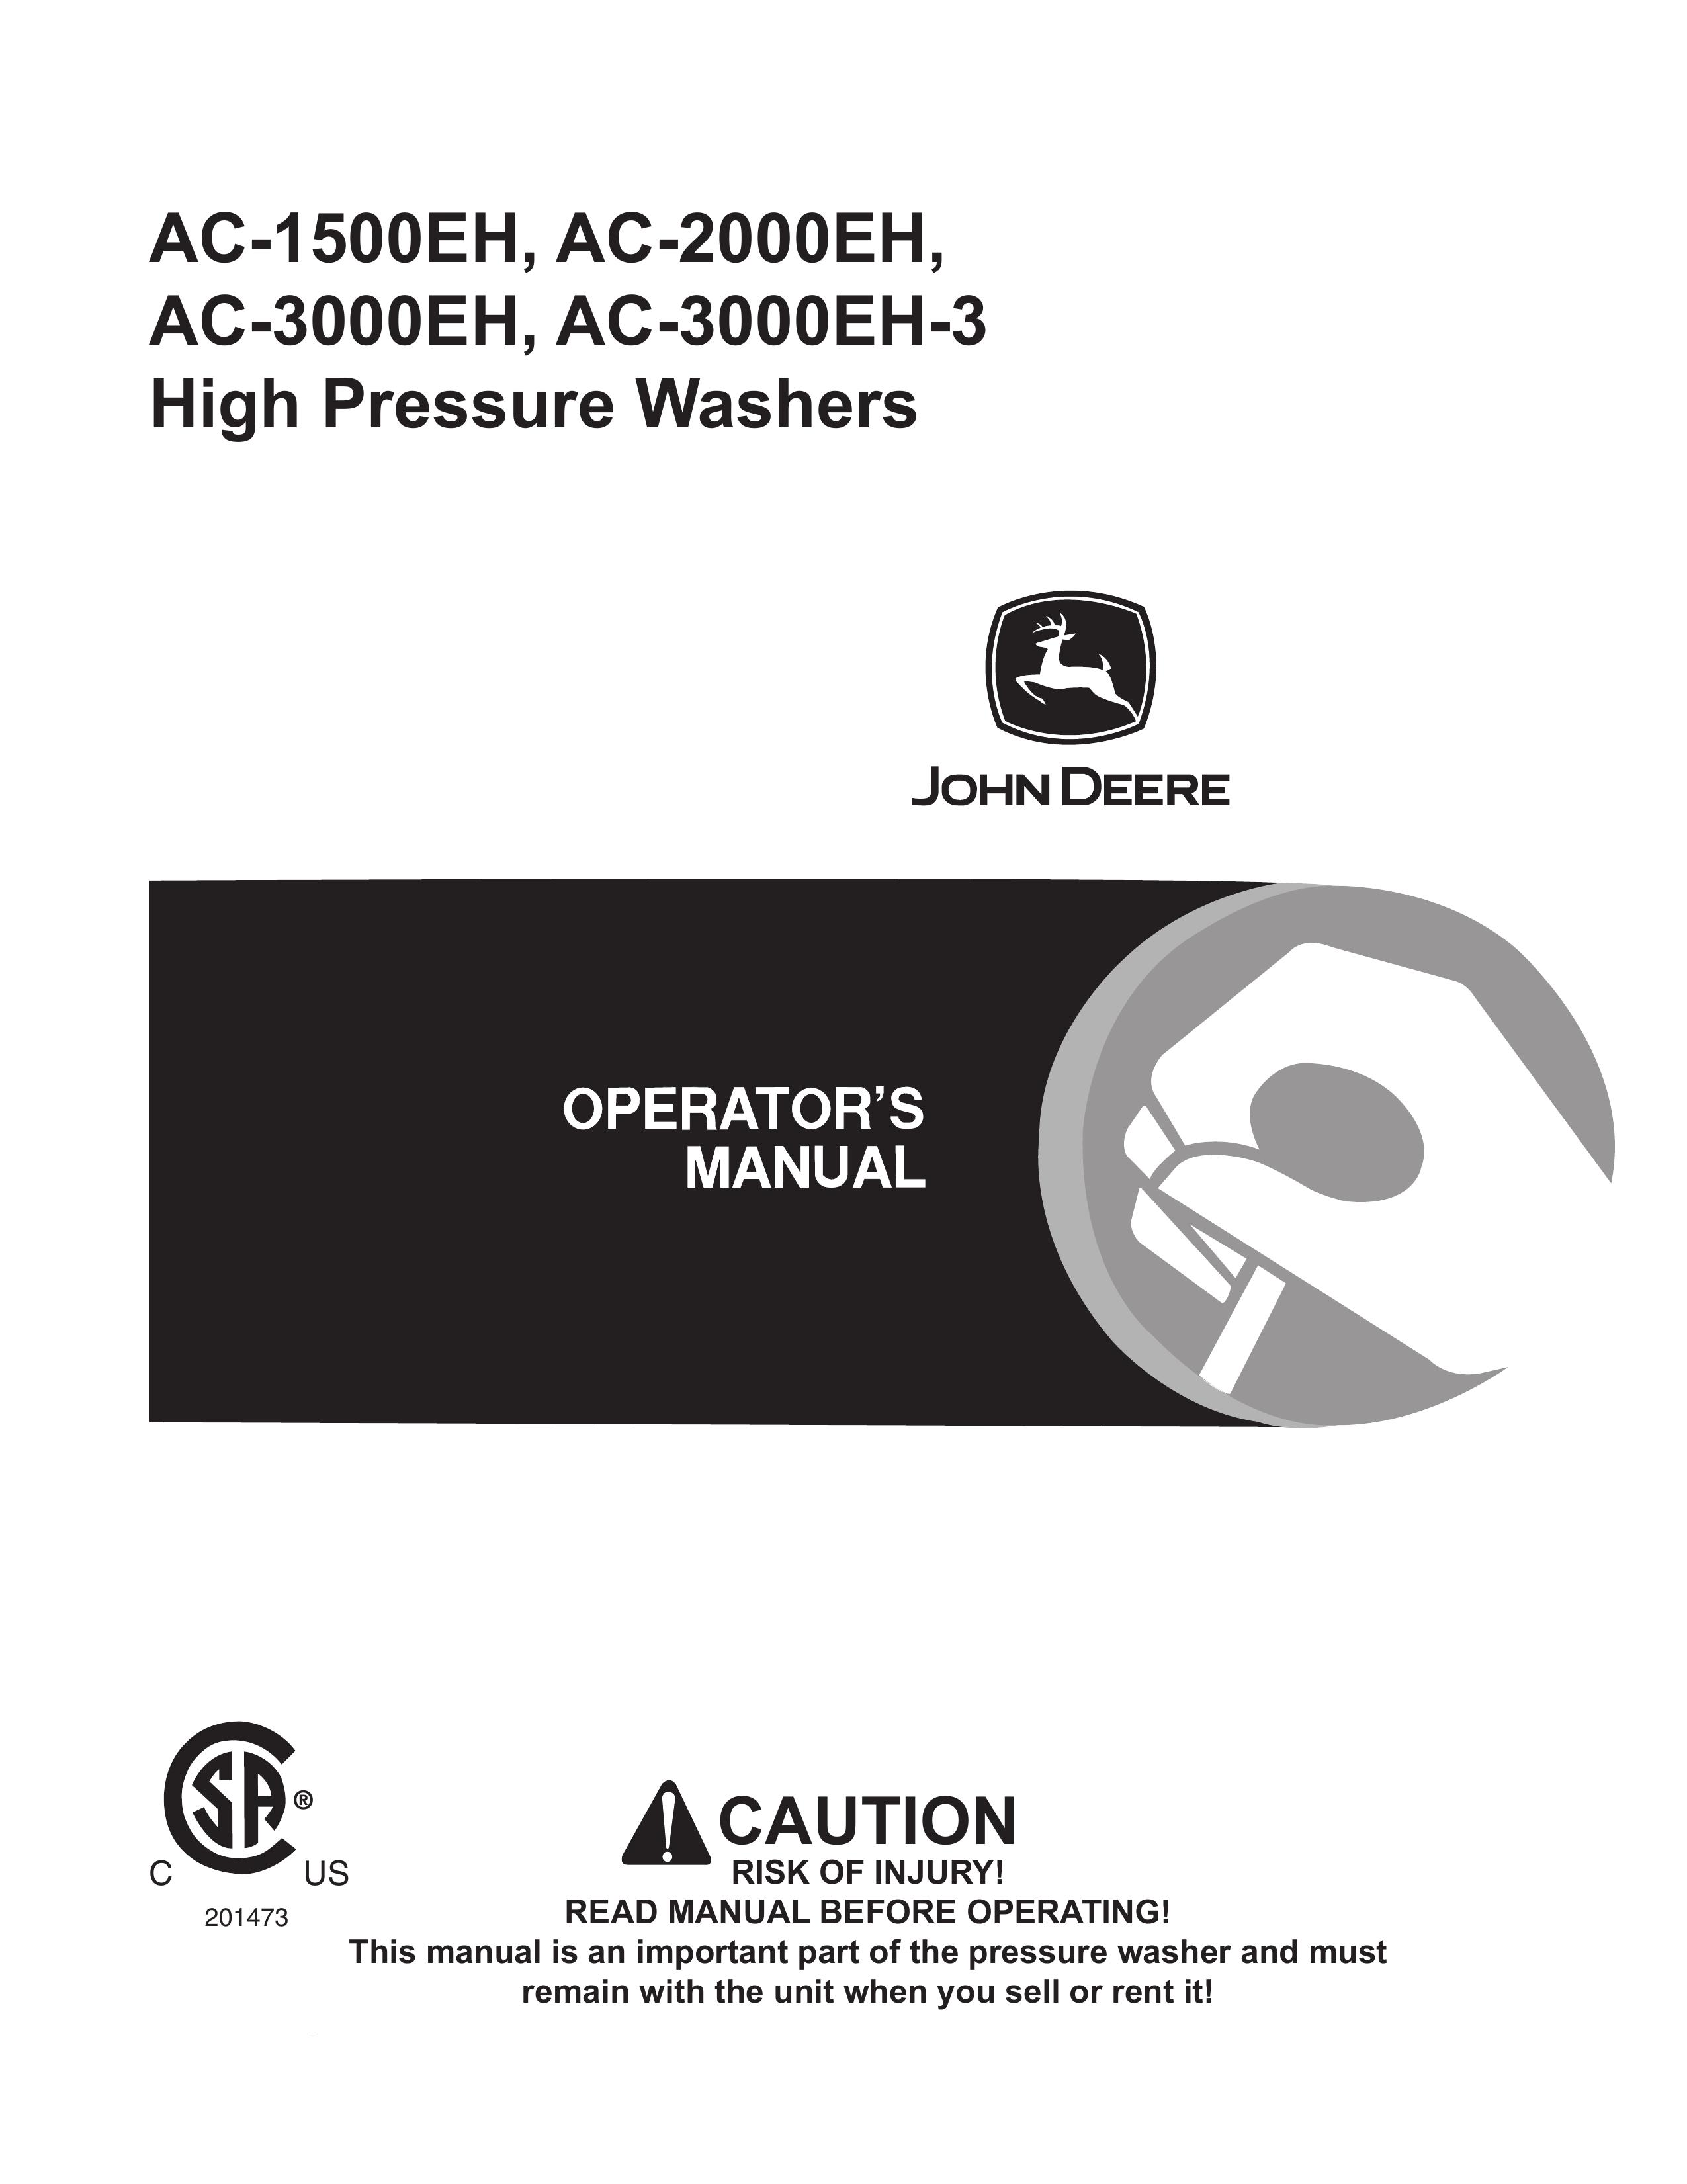 John Deere AC-3000EH Washer User Manual